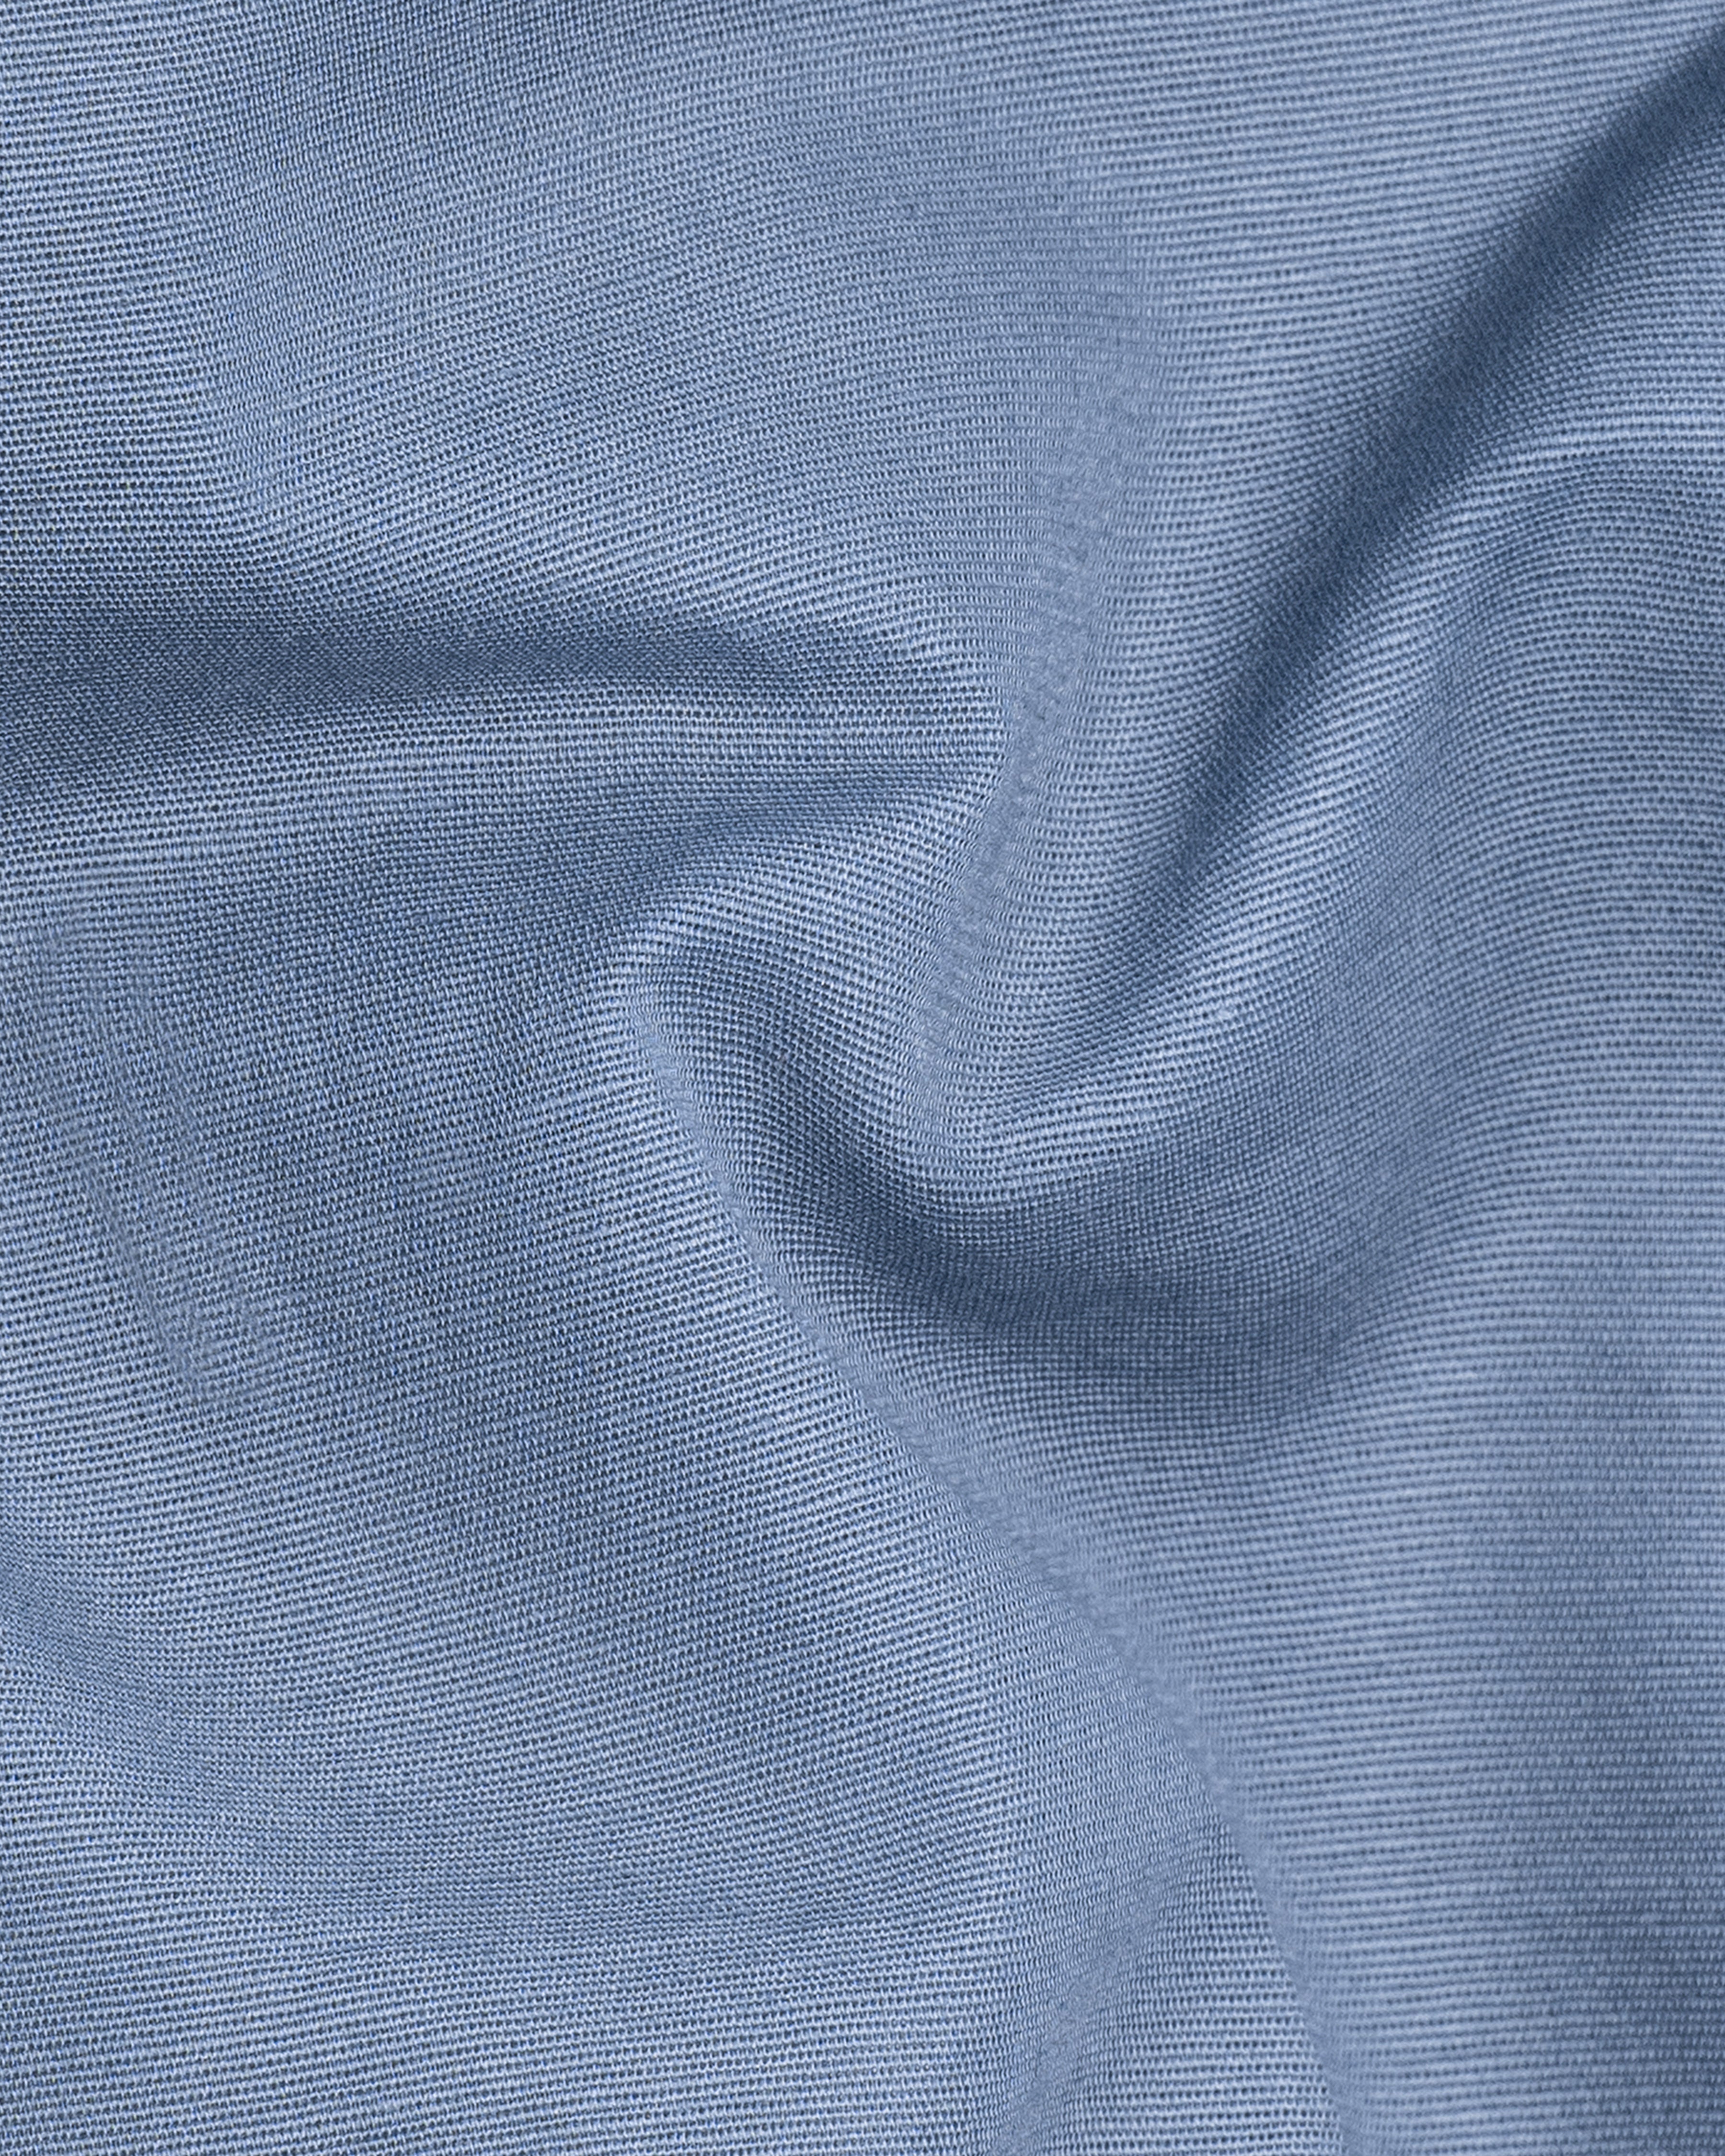 Lynch Blue And Pink Luxurious Linen Designer Shirt 9540-BLE-P222-38, 9540-BLE-P222-H-38, 9540-BLE-P222-39, 9540-BLE-P222-H-39, 9540-BLE-P222-40, 9540-BLE-P222-H-40, 9540-BLE-P222-42, 9540-BLE-P222-H-42, 9540-BLE-P222-44, 9540-BLE-P222-H-44, 9540-BLE-P222-46, 9540-BLE-P222-H-46, 9540-BLE-P222-48, 9540-BLE-P222-H-48, 9540-BLE-P222-50, 9540-BLE-P222-H-50, 9540-BLE-P222-52, 9540-BLE-P222-H-52